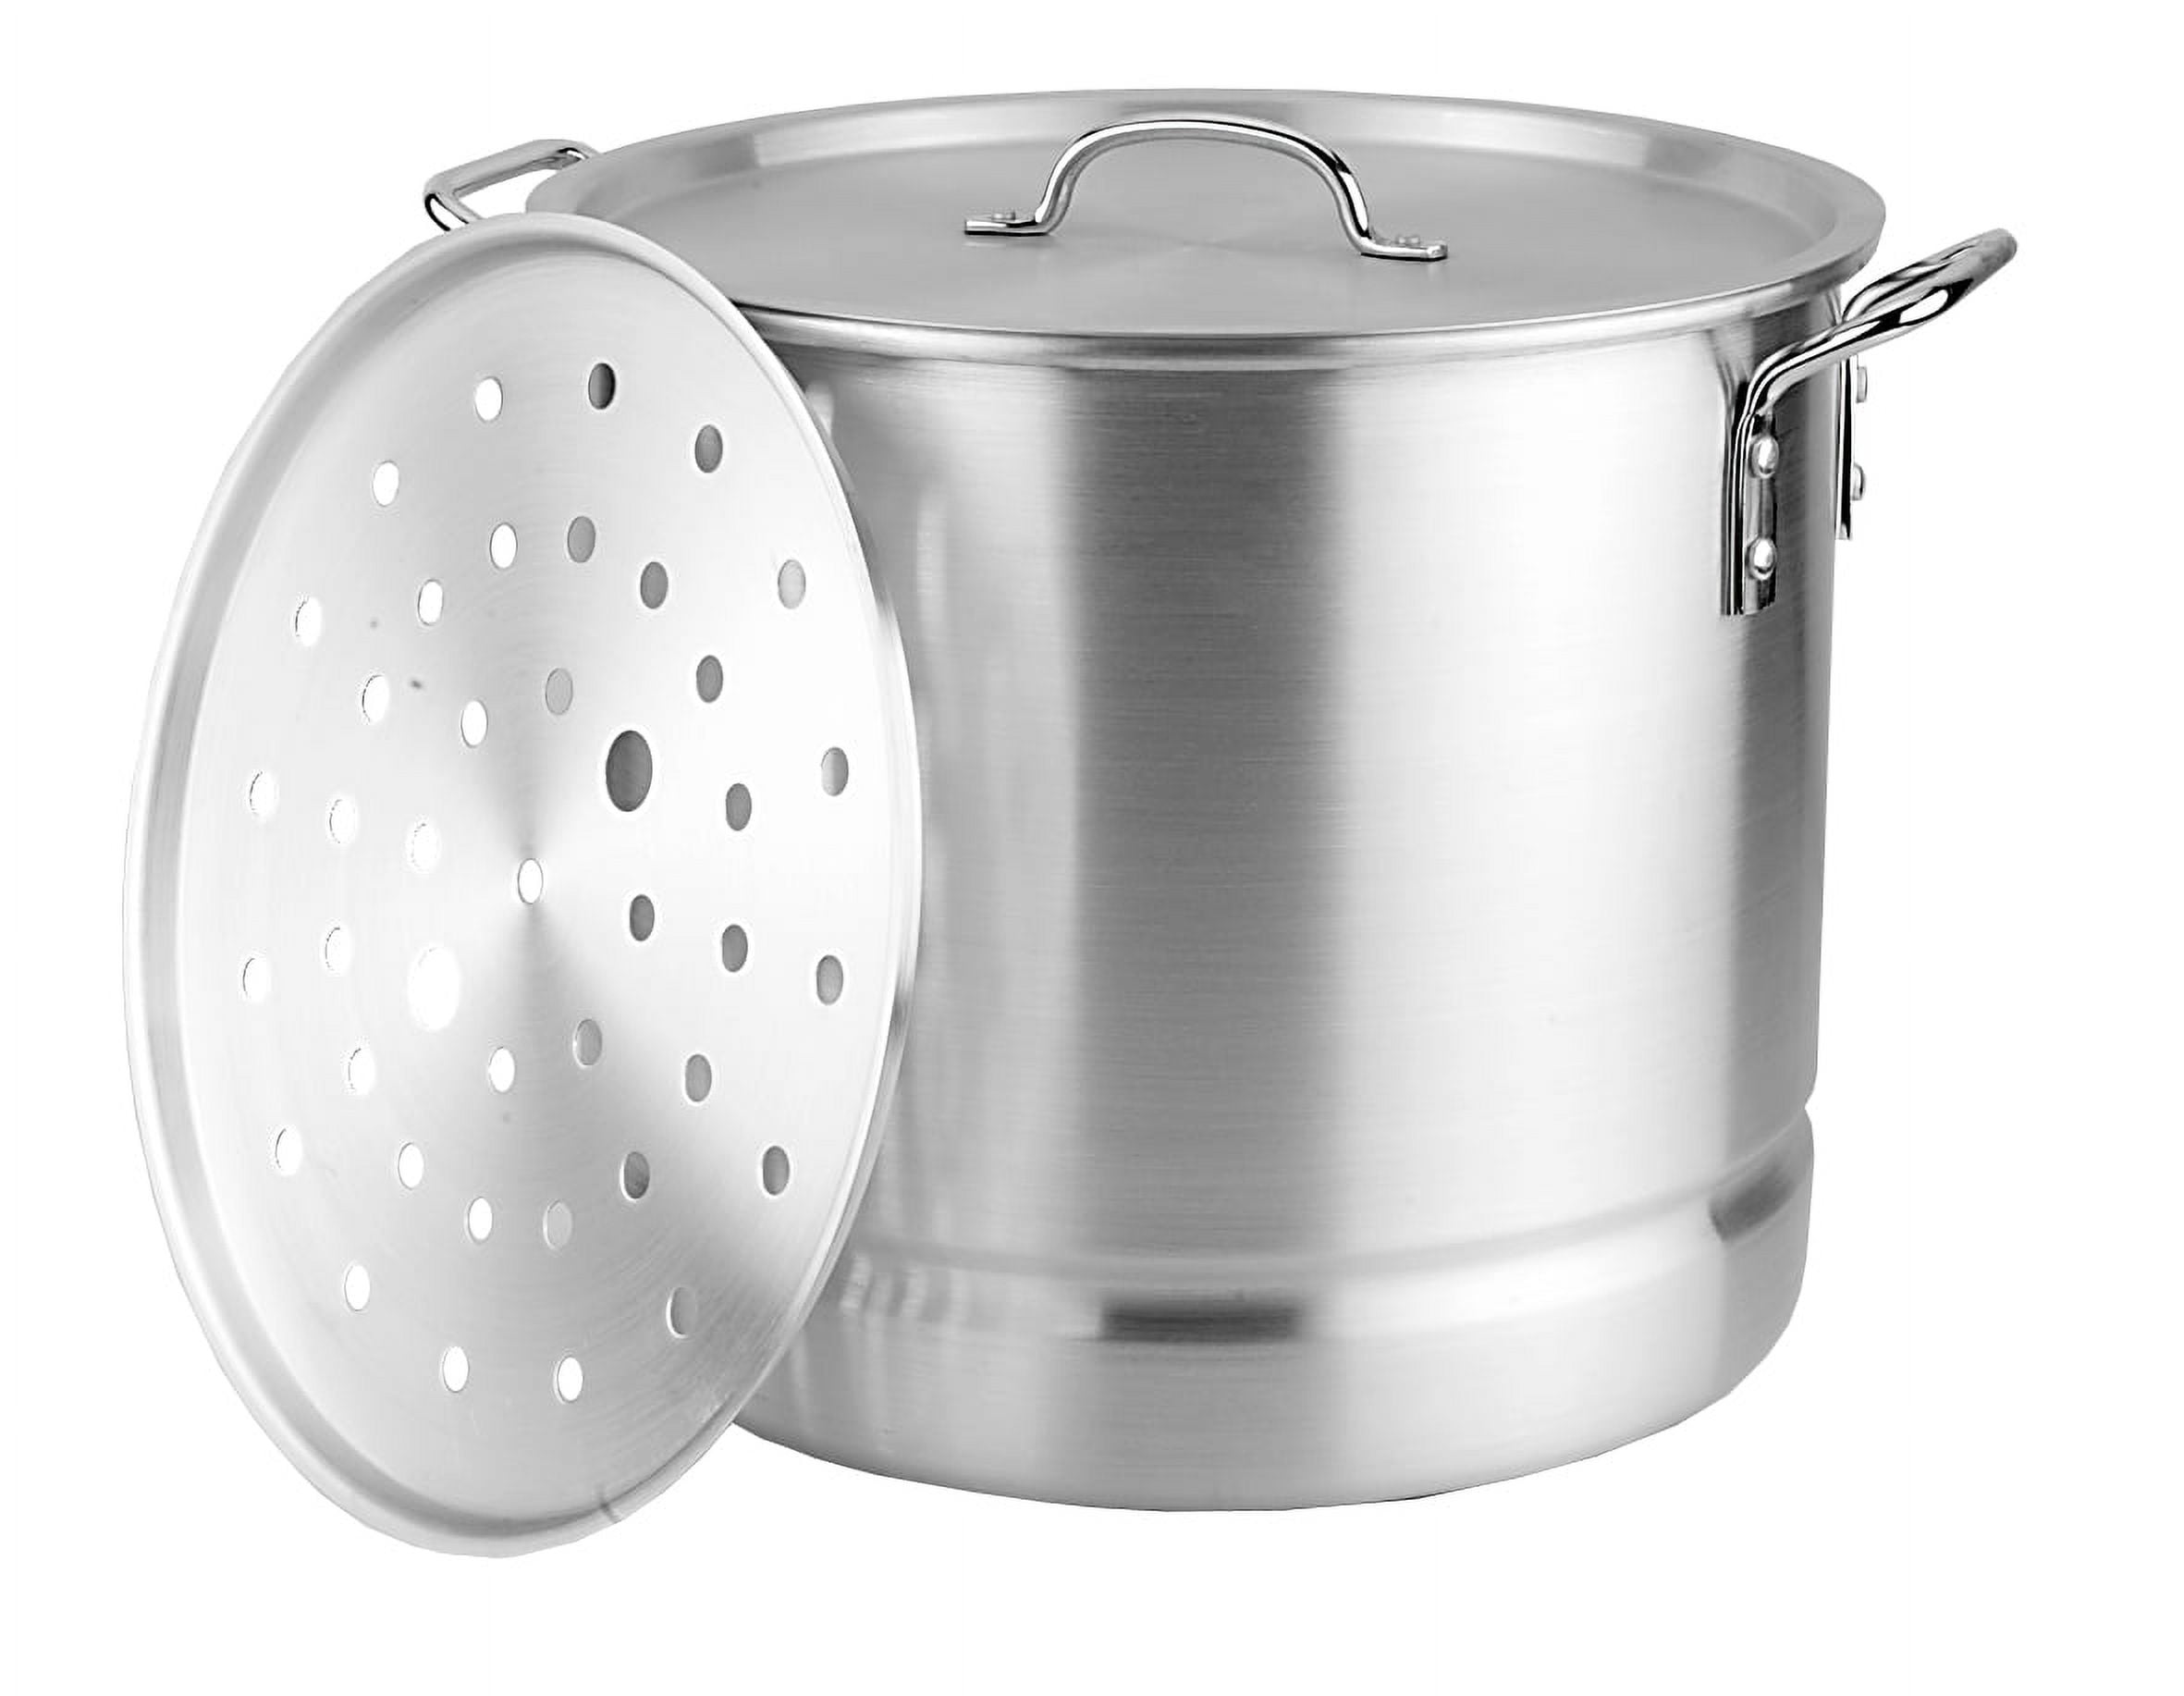 Upgrade Your Kitchen with The Sonex Big Aluminum Cooking Pot - Size #10, 40cm Diameter, 30 Liter Capacity, Size: 40.0 cm / 15.74-Inch Diameter. 23.0